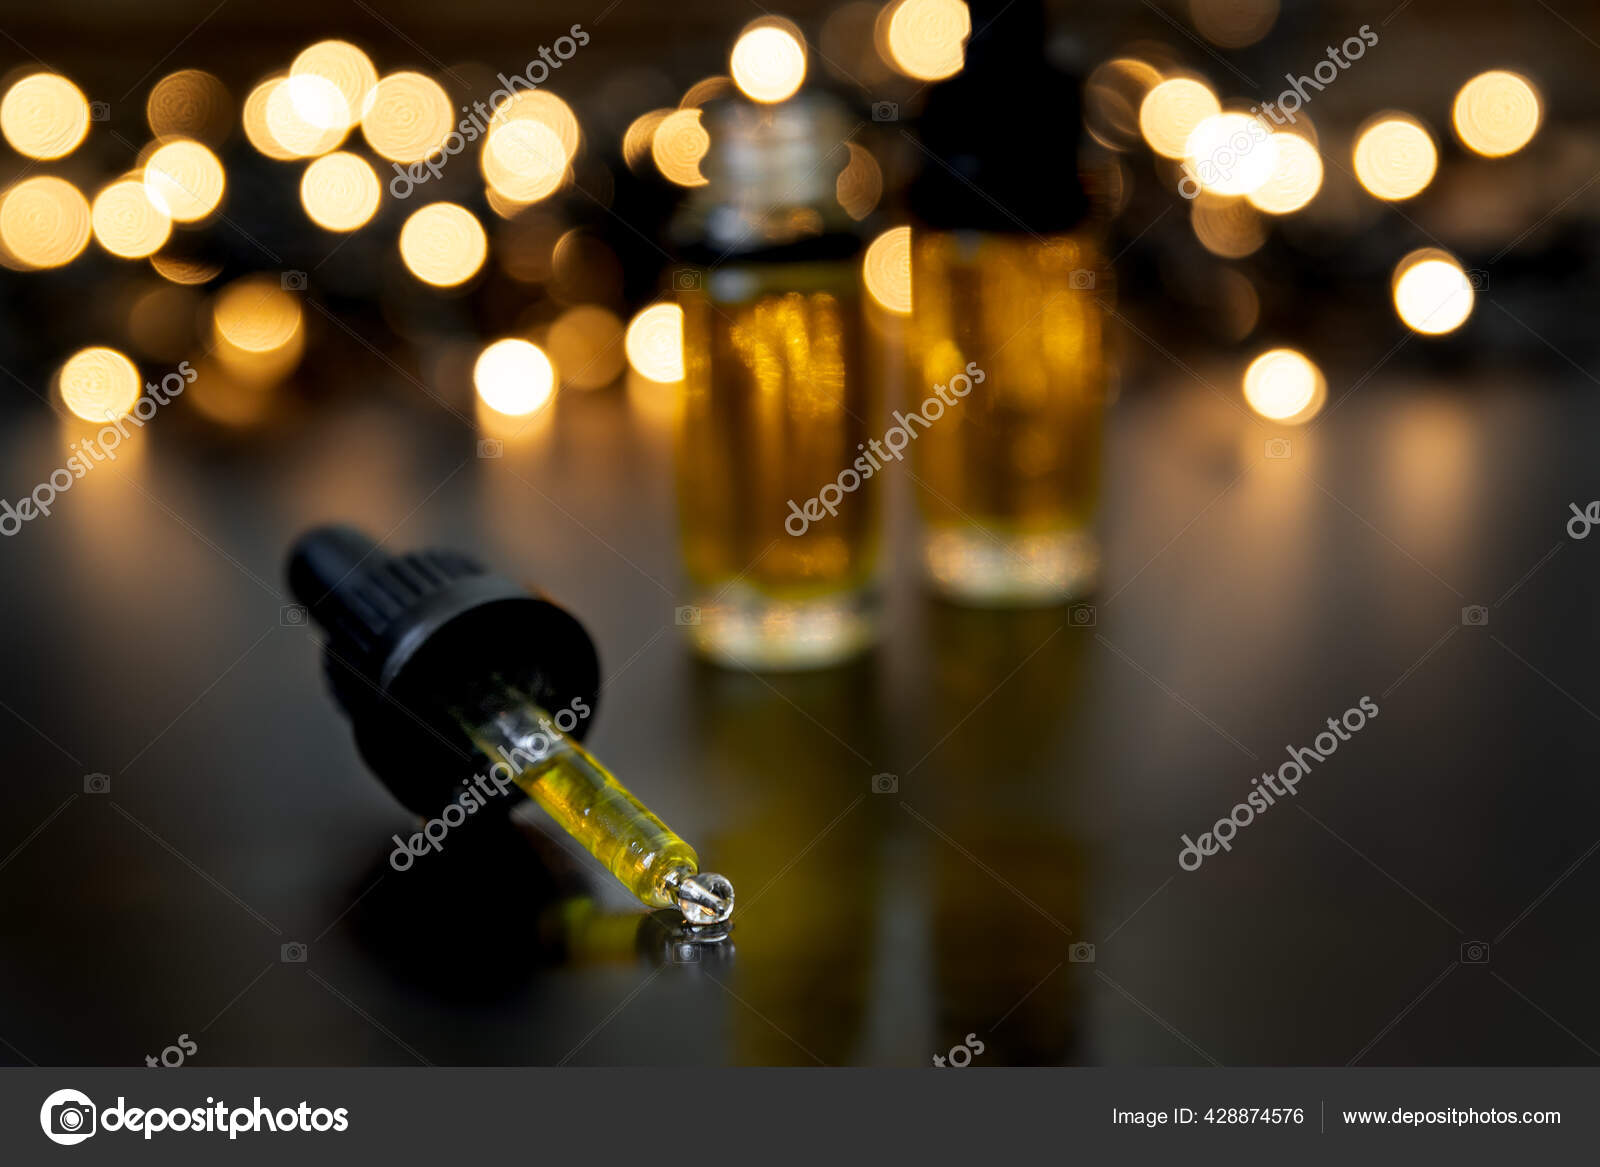 Cbd Oil Drops Moody Dark Background Dim Lighting Stock Photo by ©dianarui  428874576